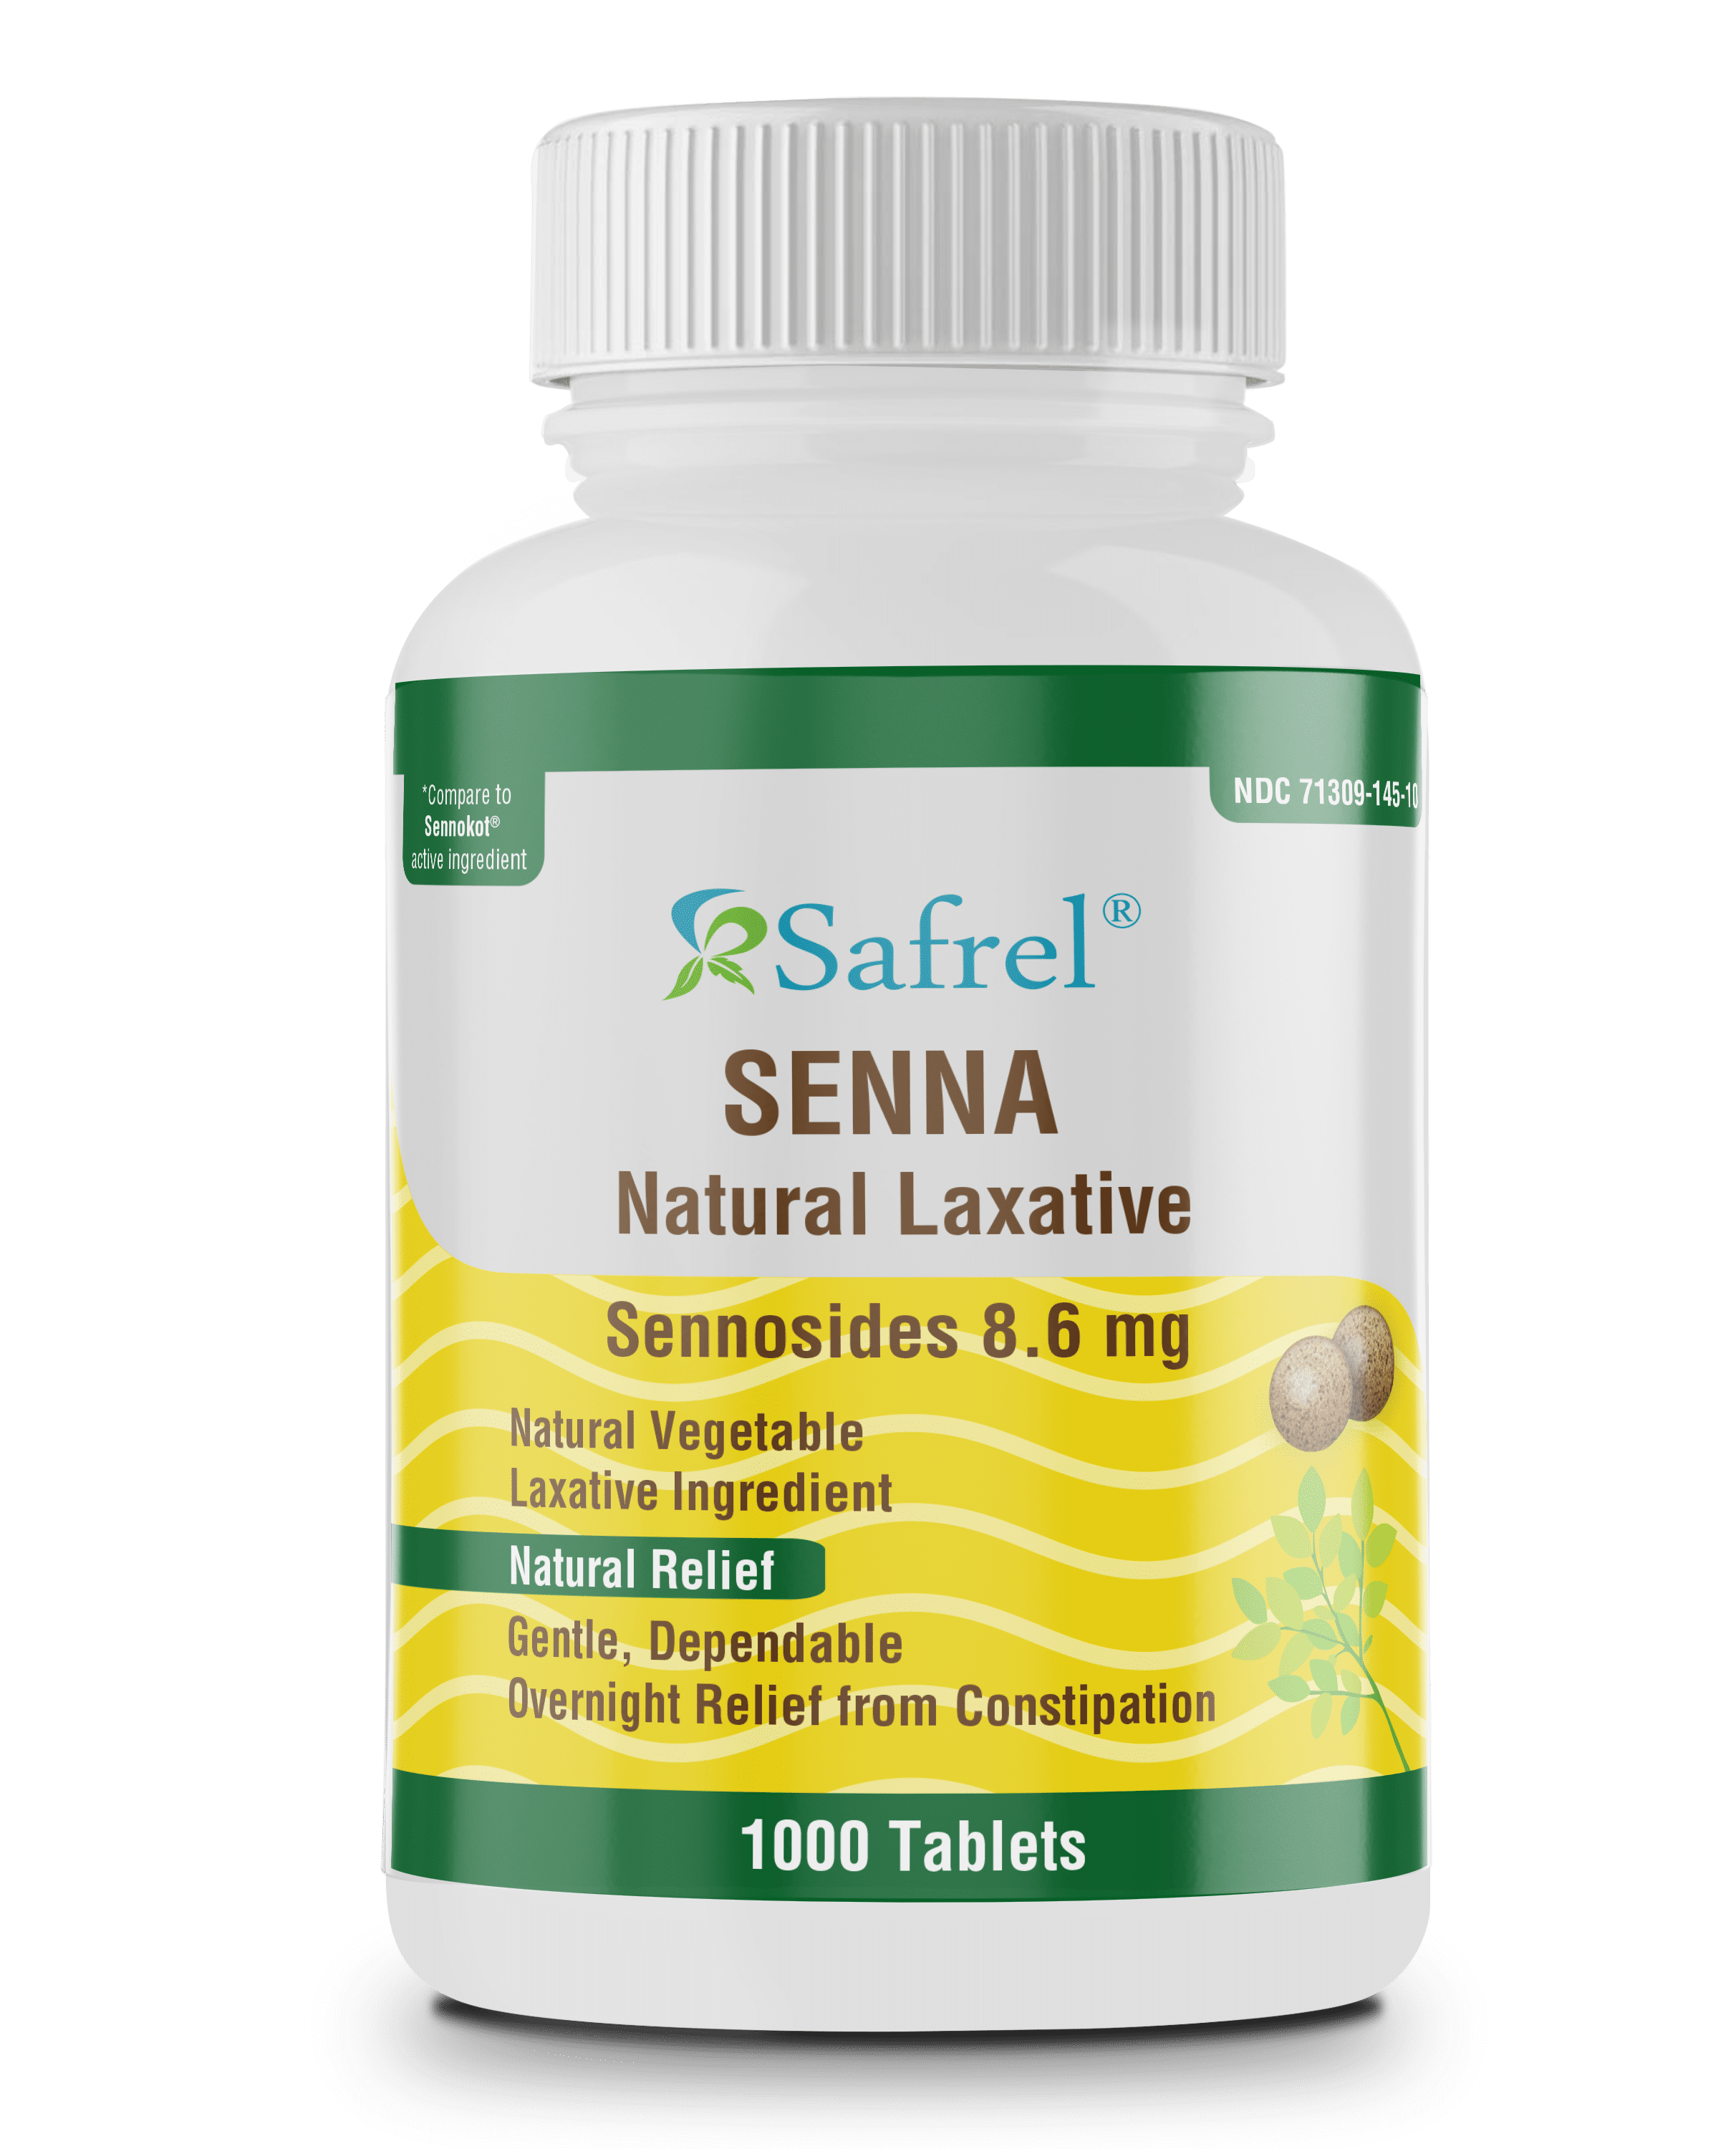 Safrel Senna 8 6 Mg Tablets 1000 Count Natural Sennosides Vegetable Laxative For Constipation